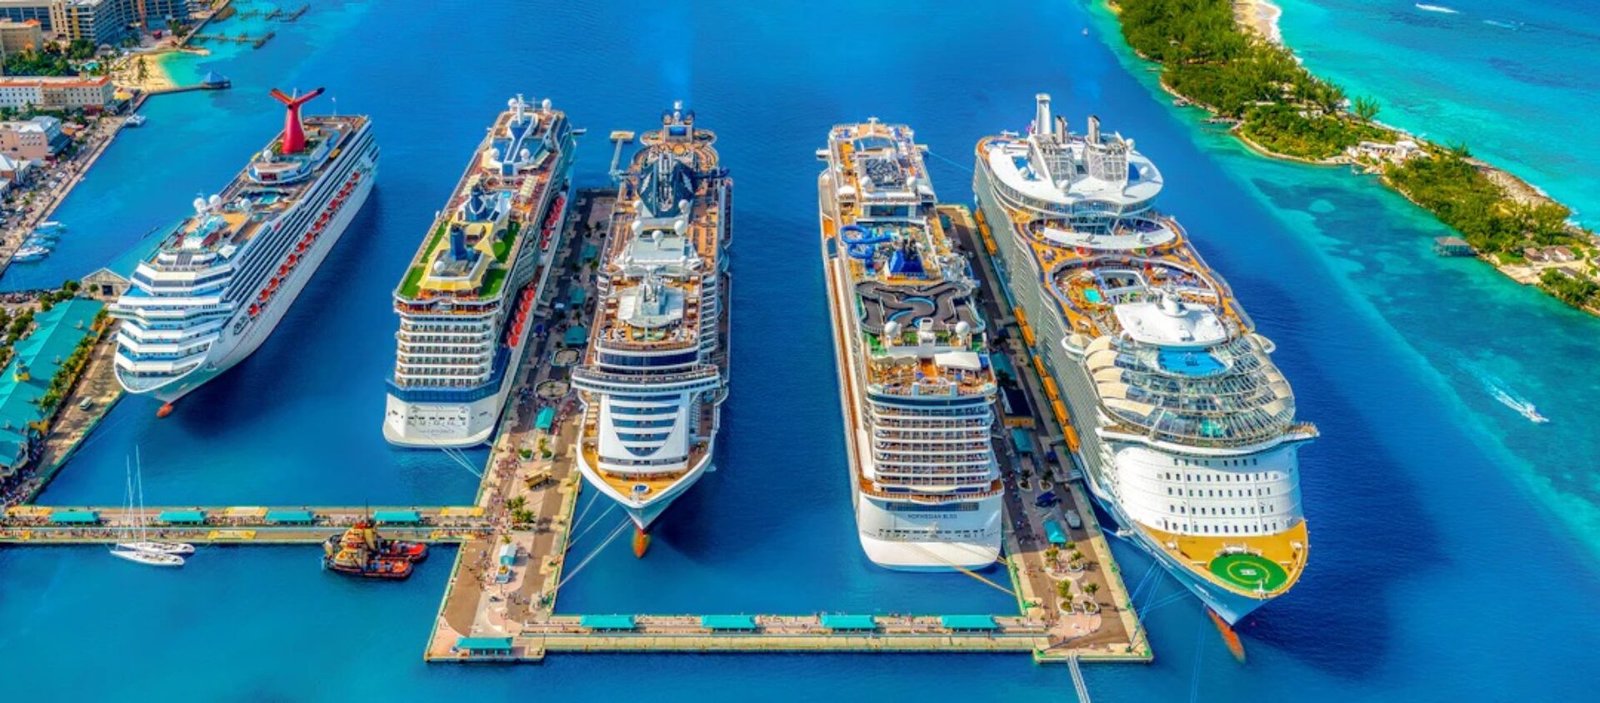 family cruise network cruise ship header image